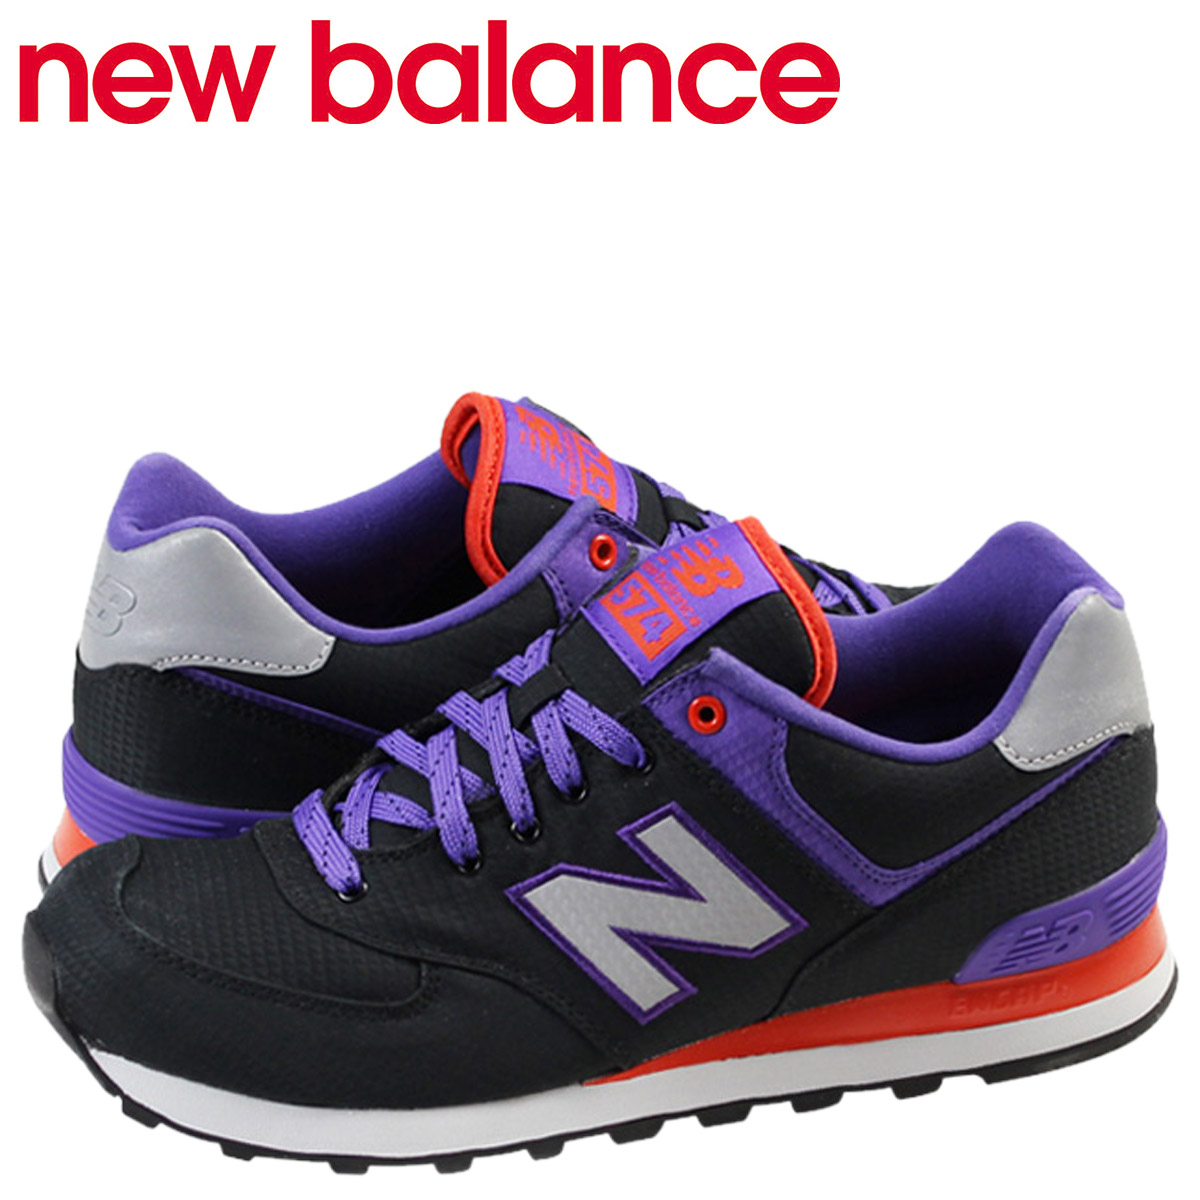 new balance 574 black purple